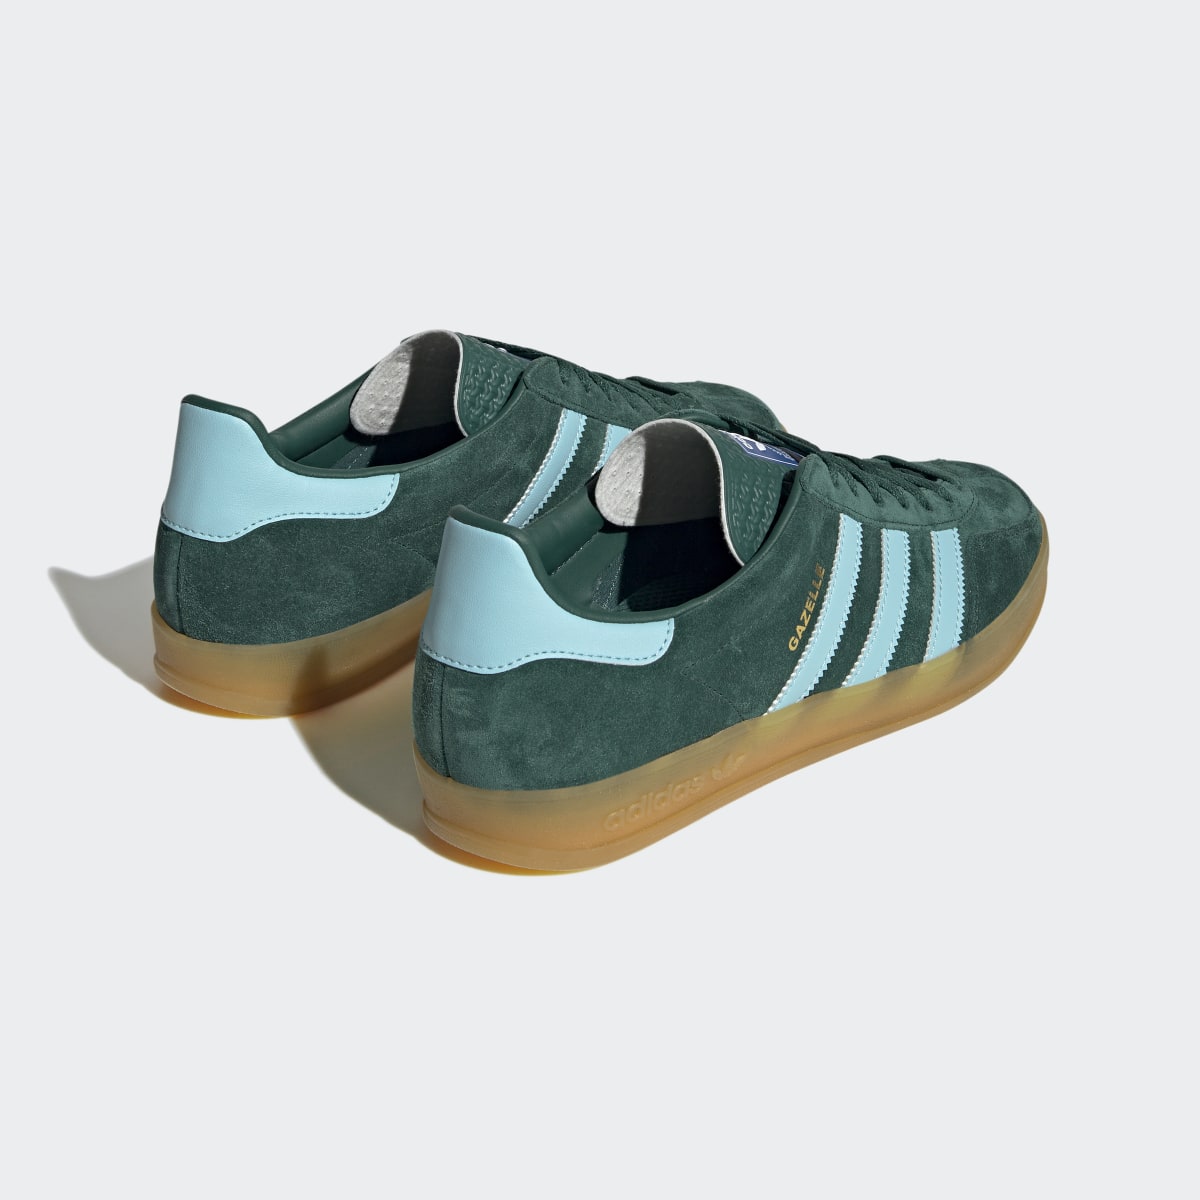 Adidas Gazelle Indoor Shoes. 6